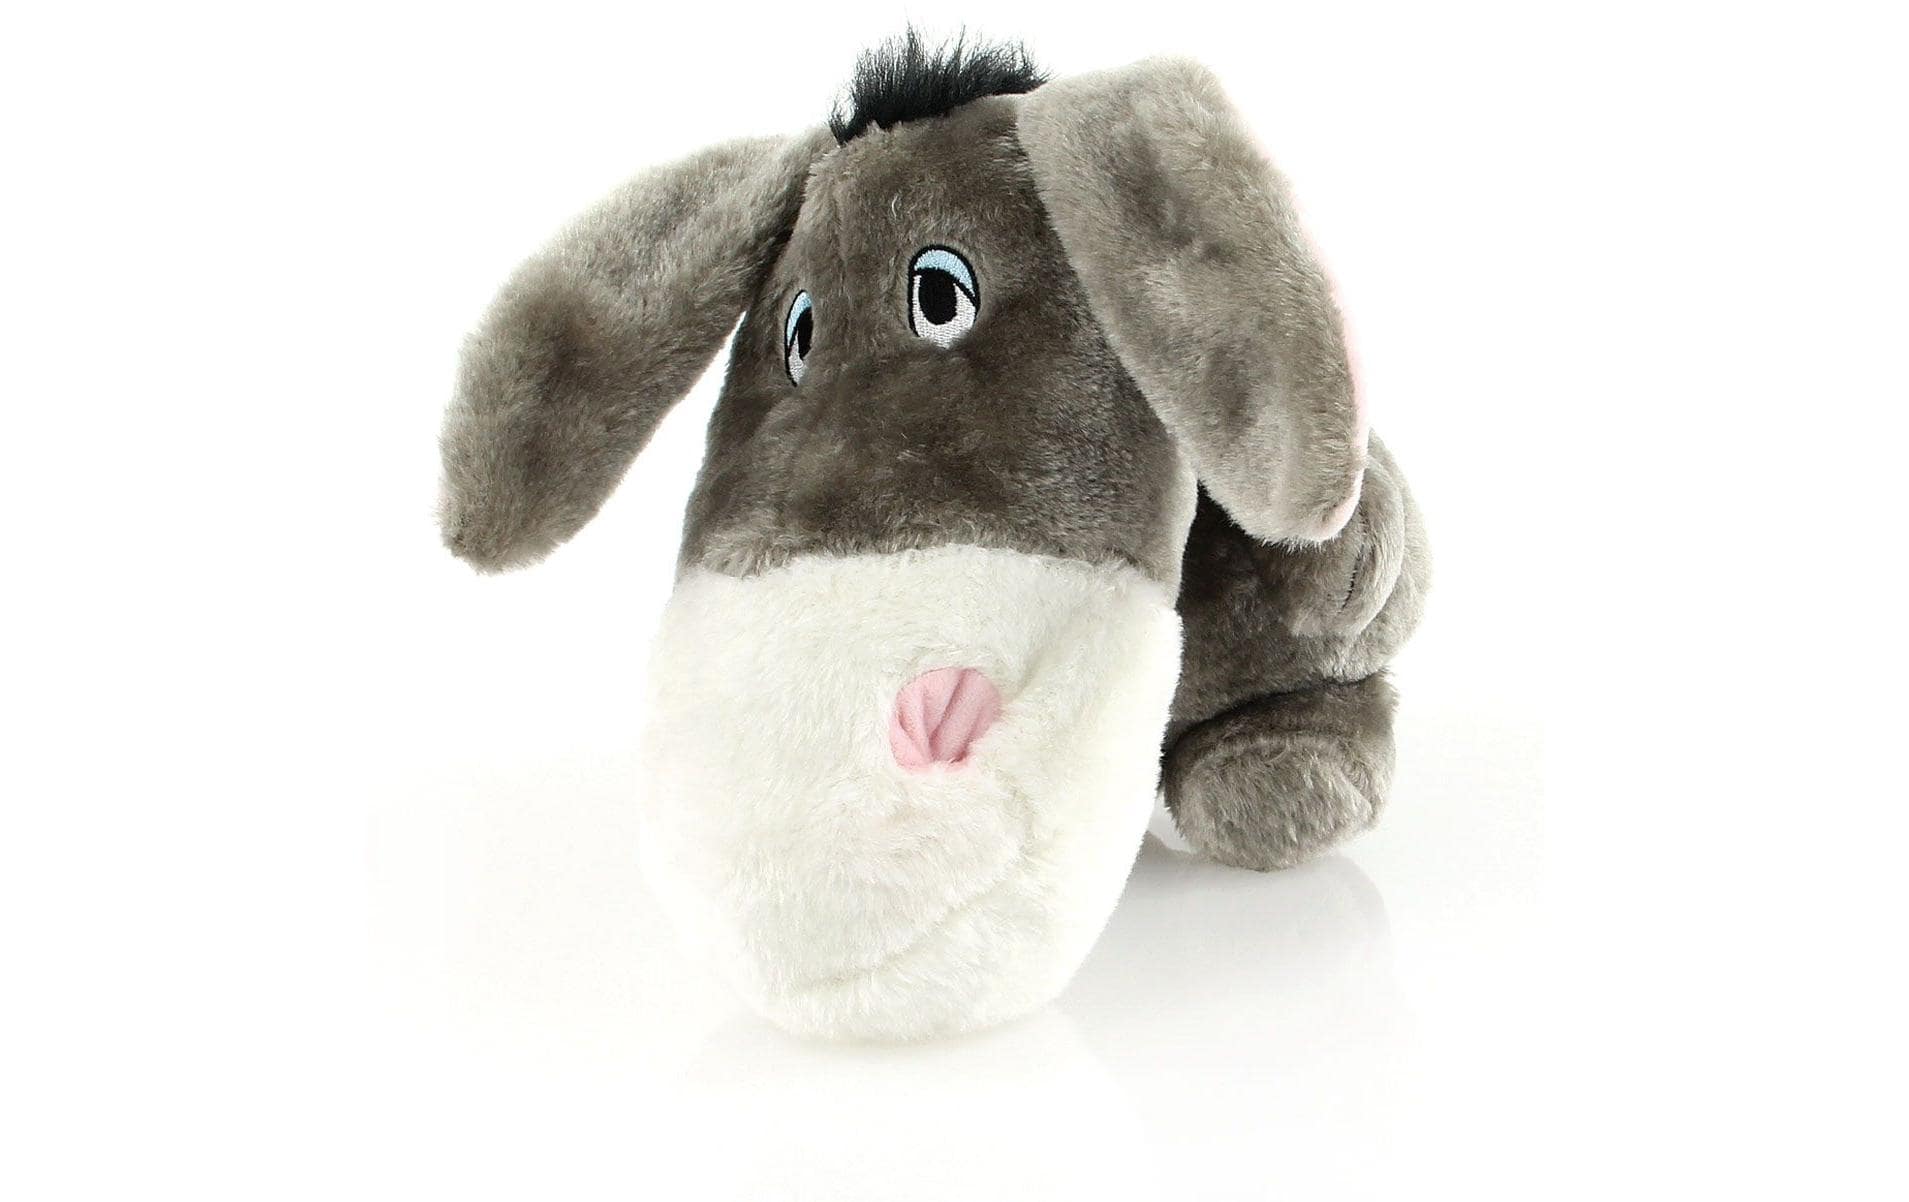 SwissPet Hunde-Spielzeug Esel George, 45 cm, Grau/Weiss